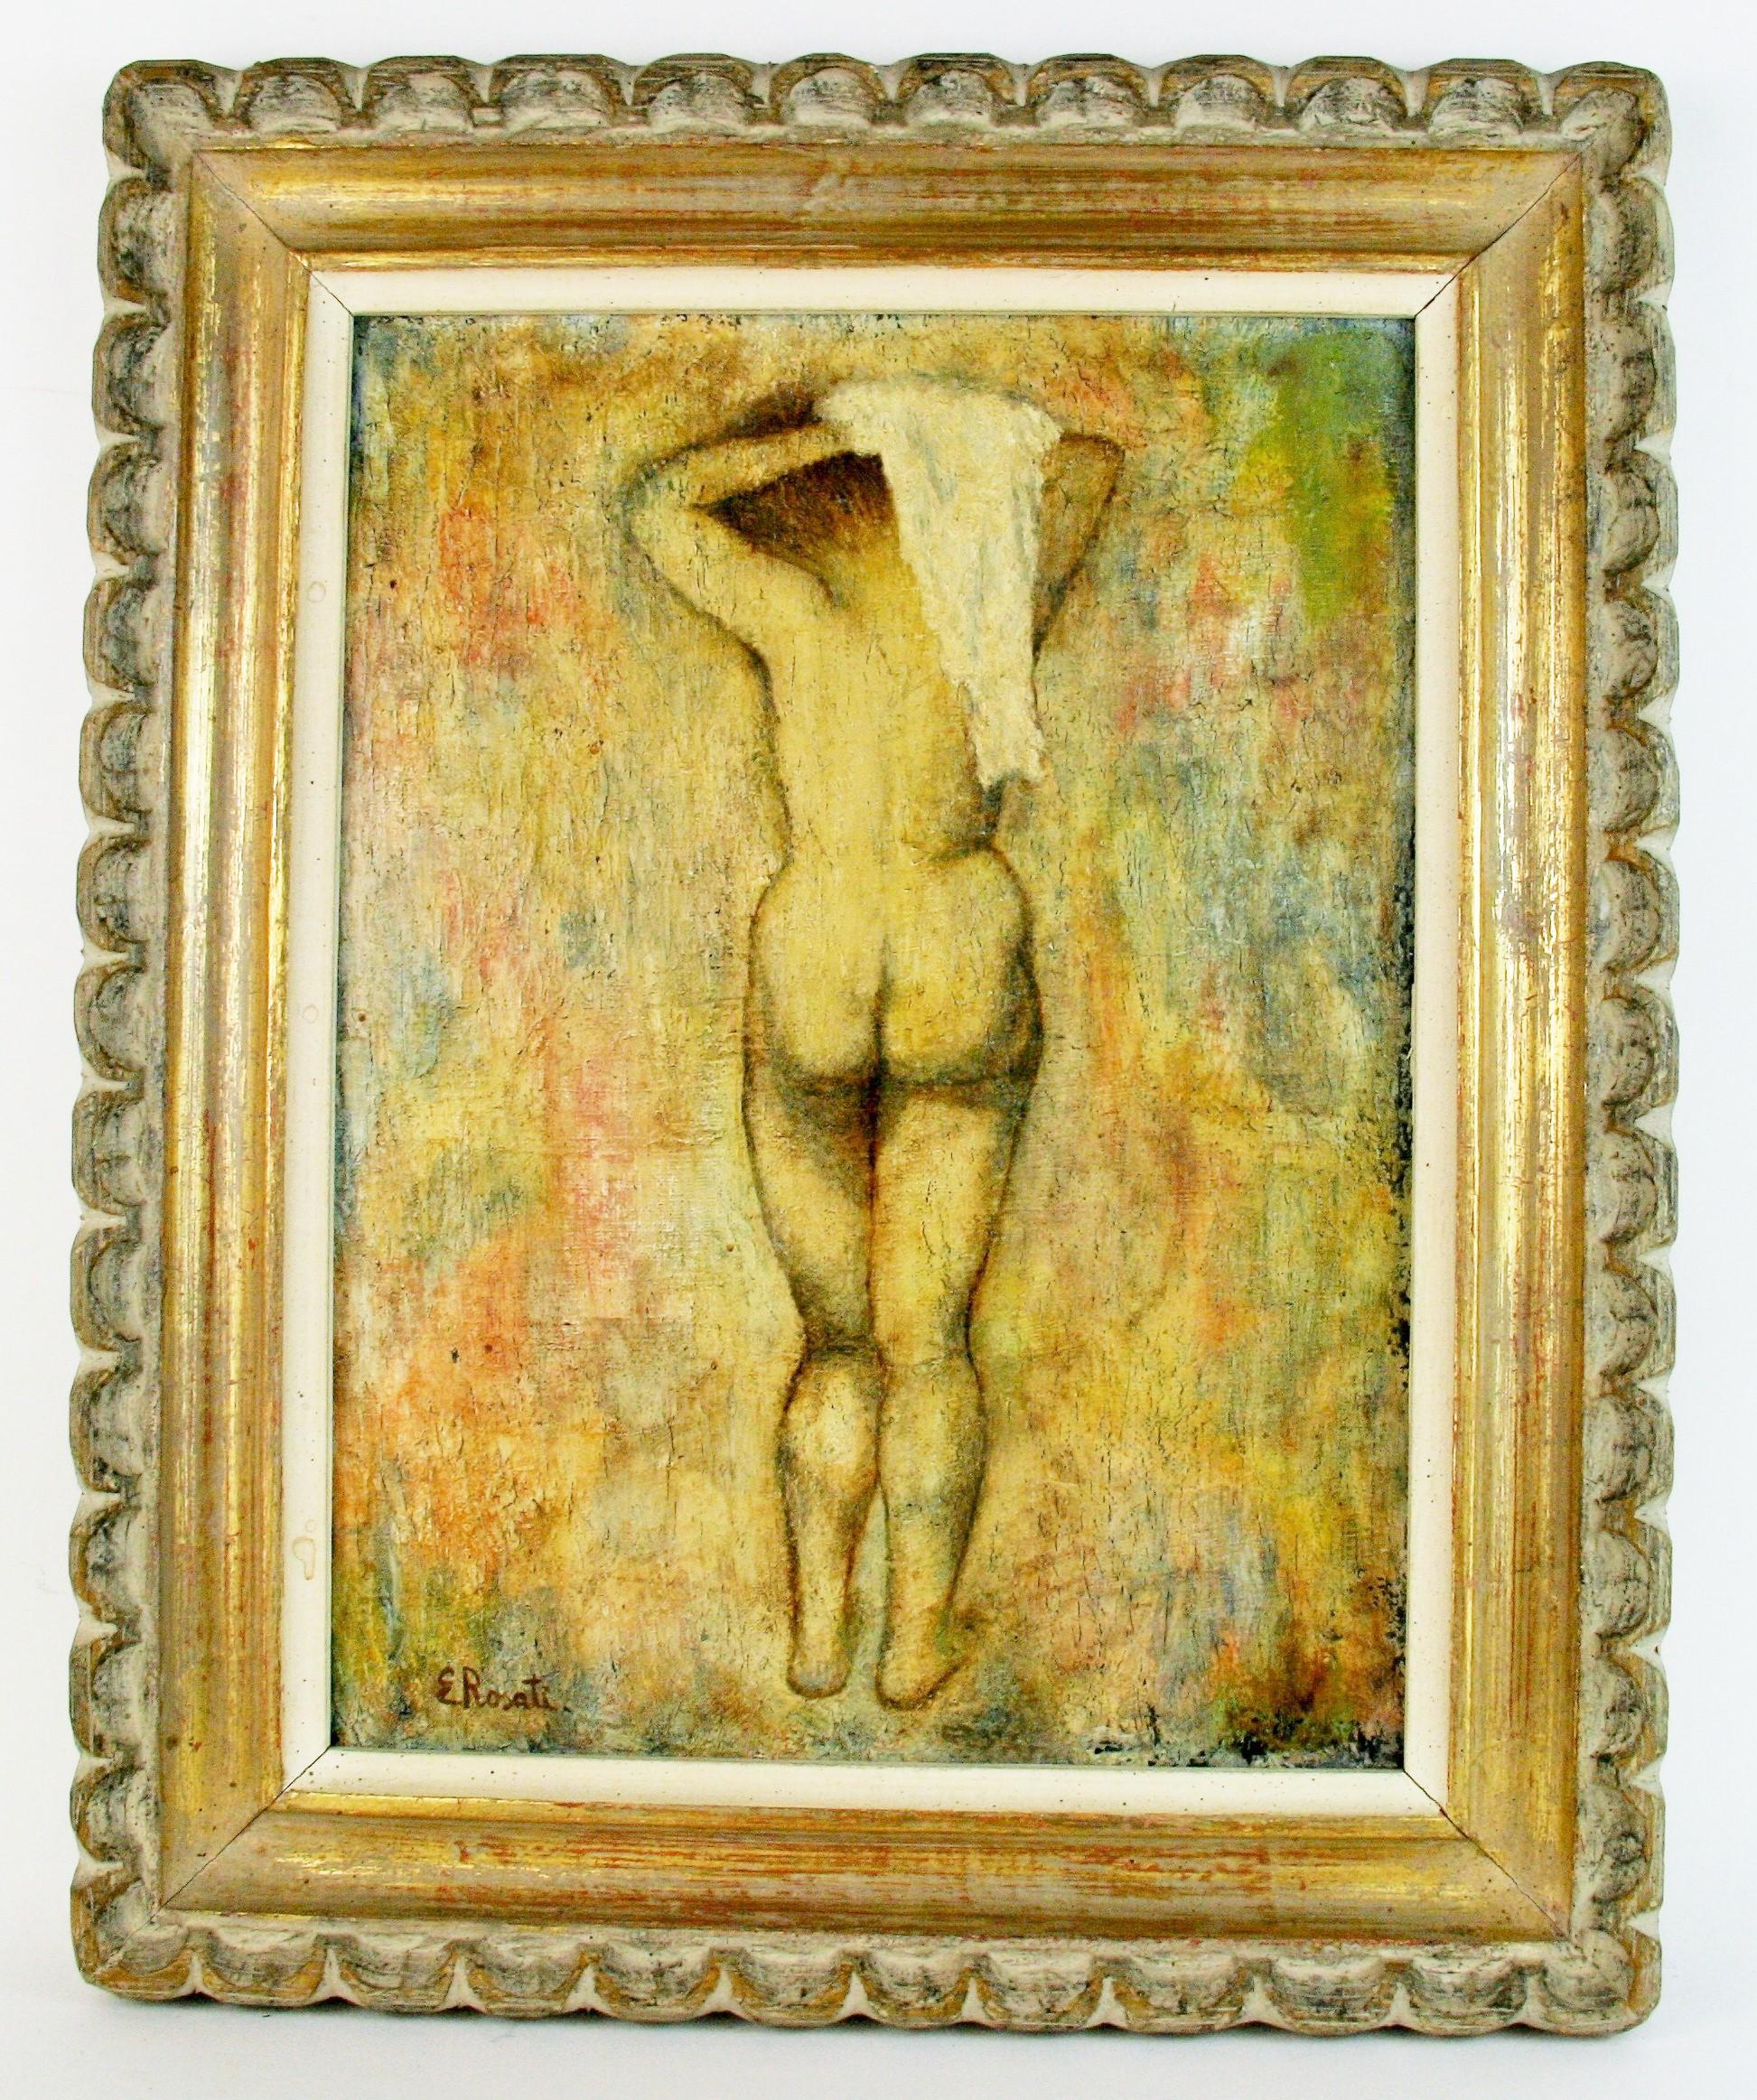 3308 Oil on canvas in a custom gilt wood frame
Image size 15.5x11.5